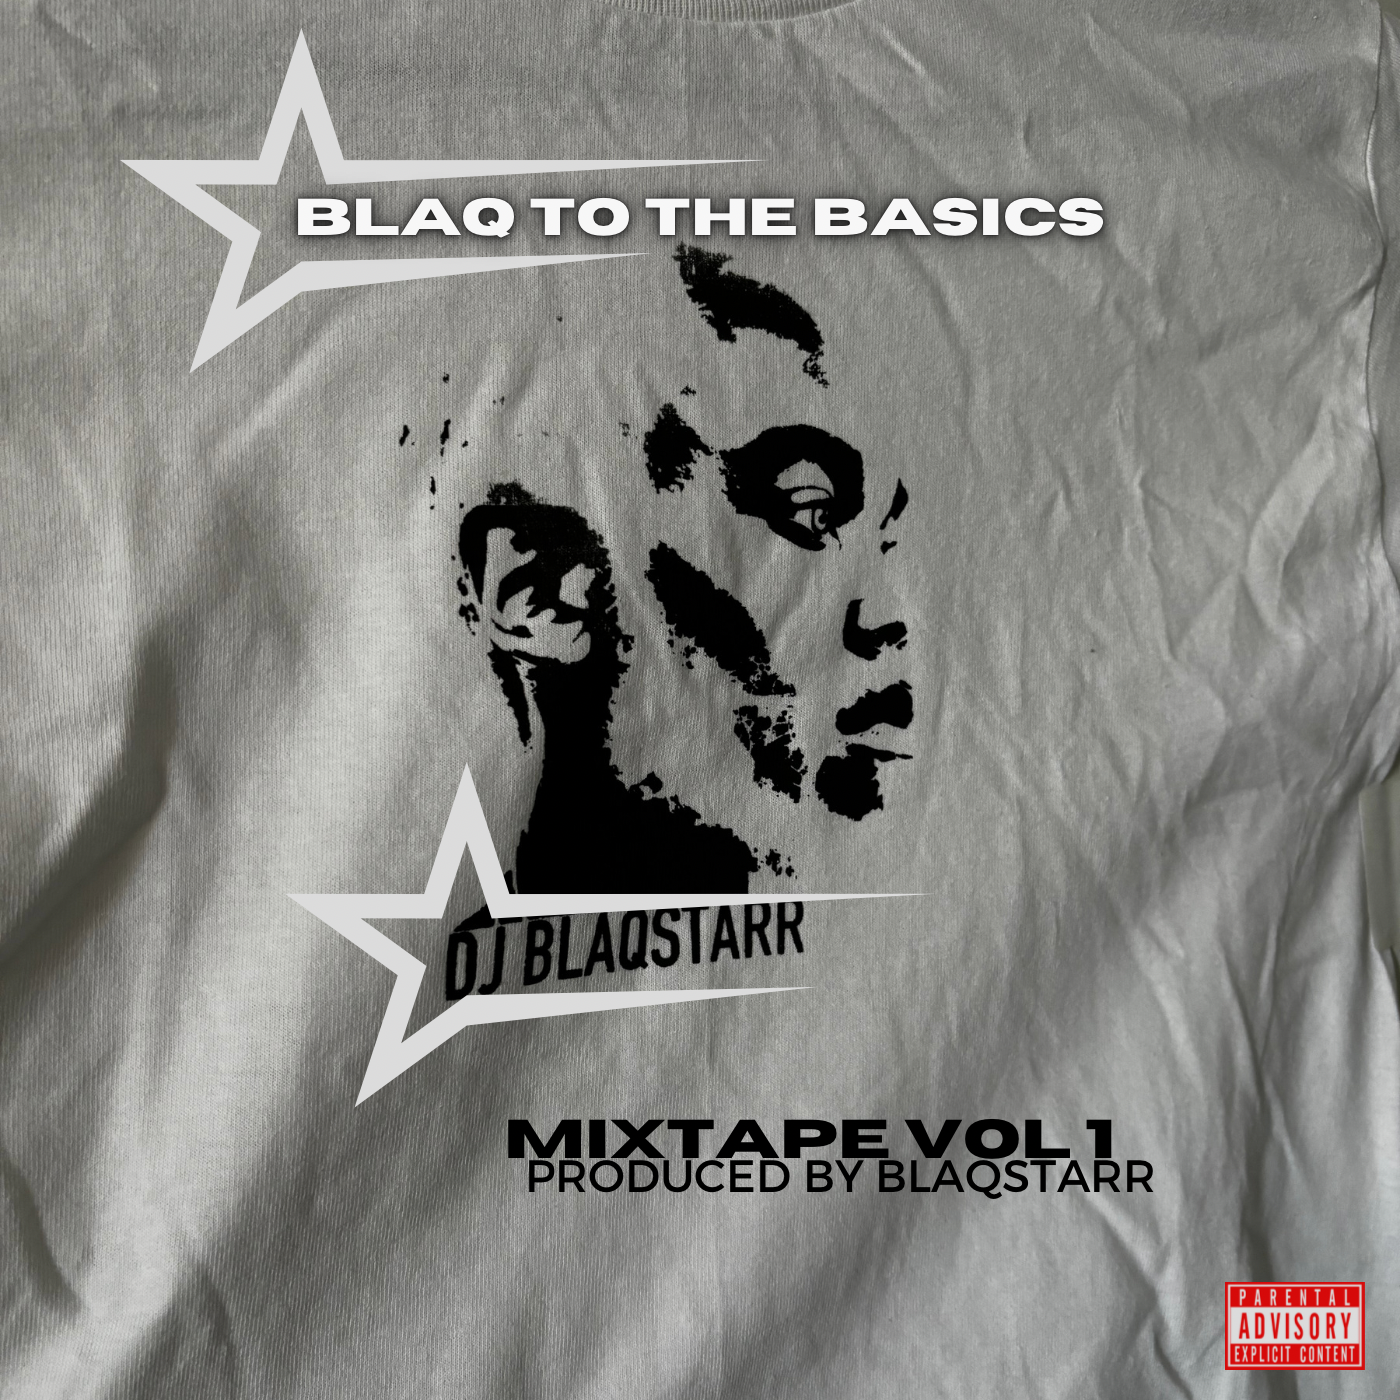 Blaq To The Basics Digital Album Produced by Blaqstarr